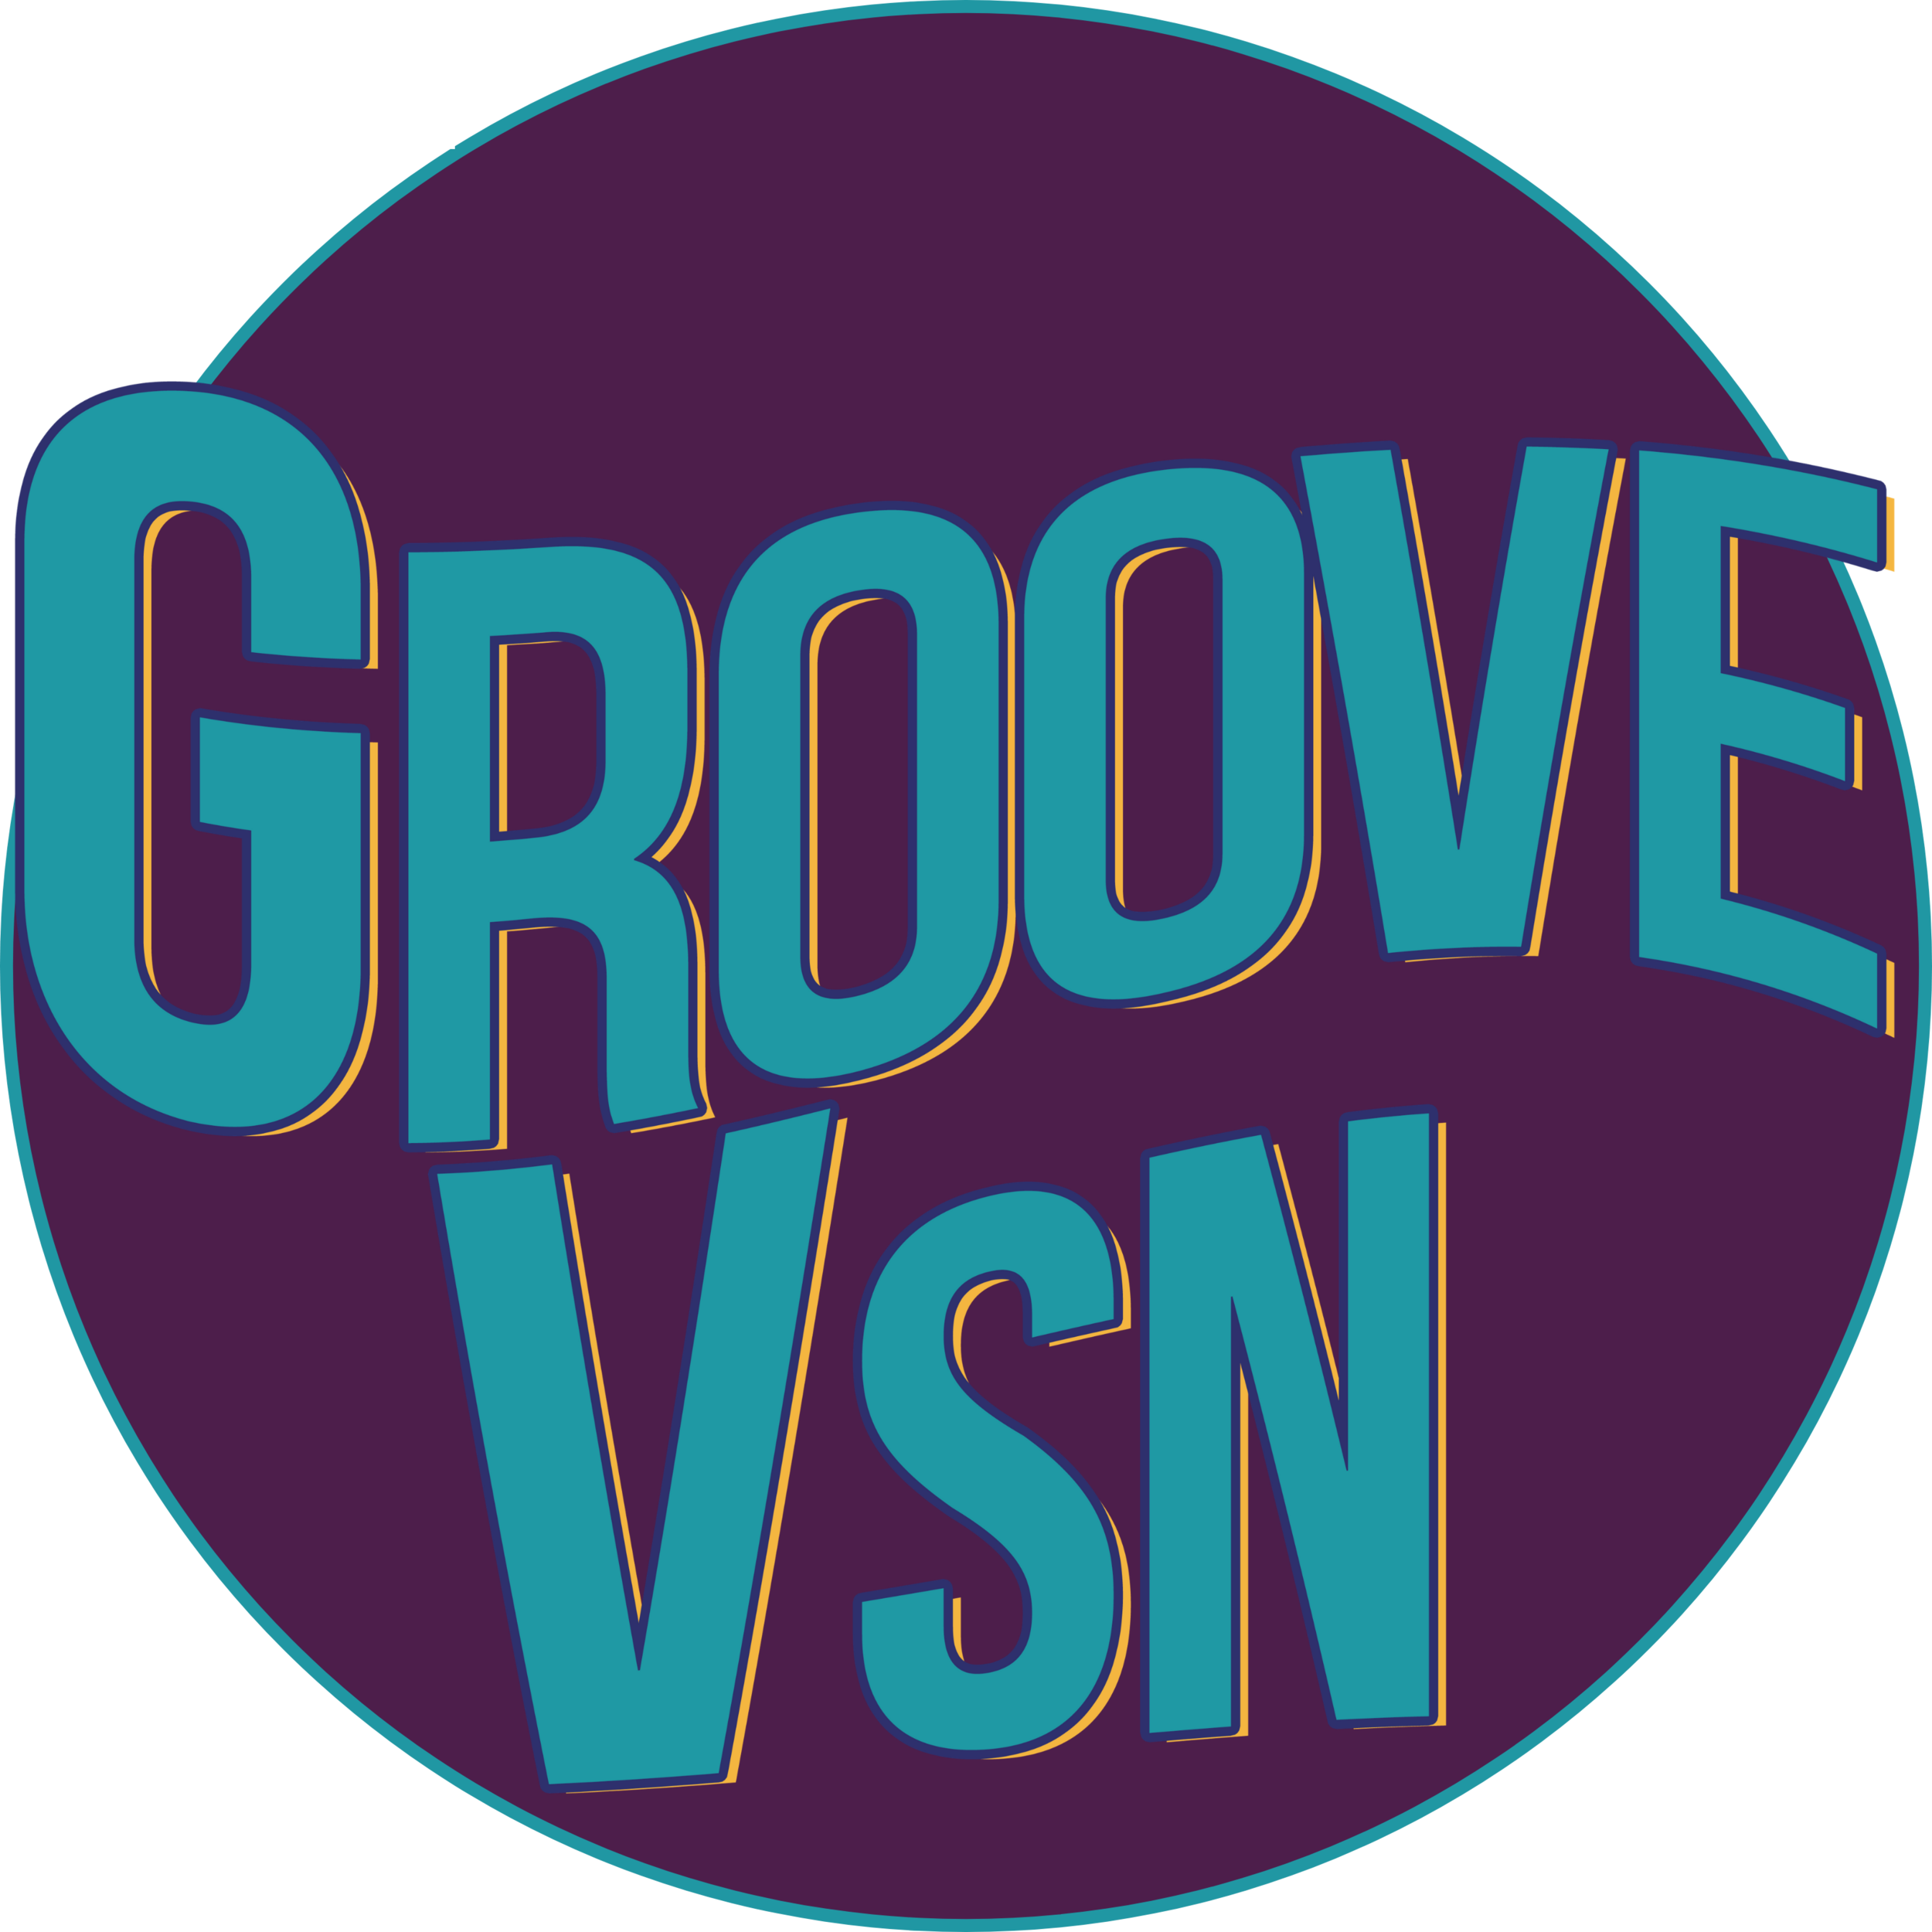 GrooveVsn